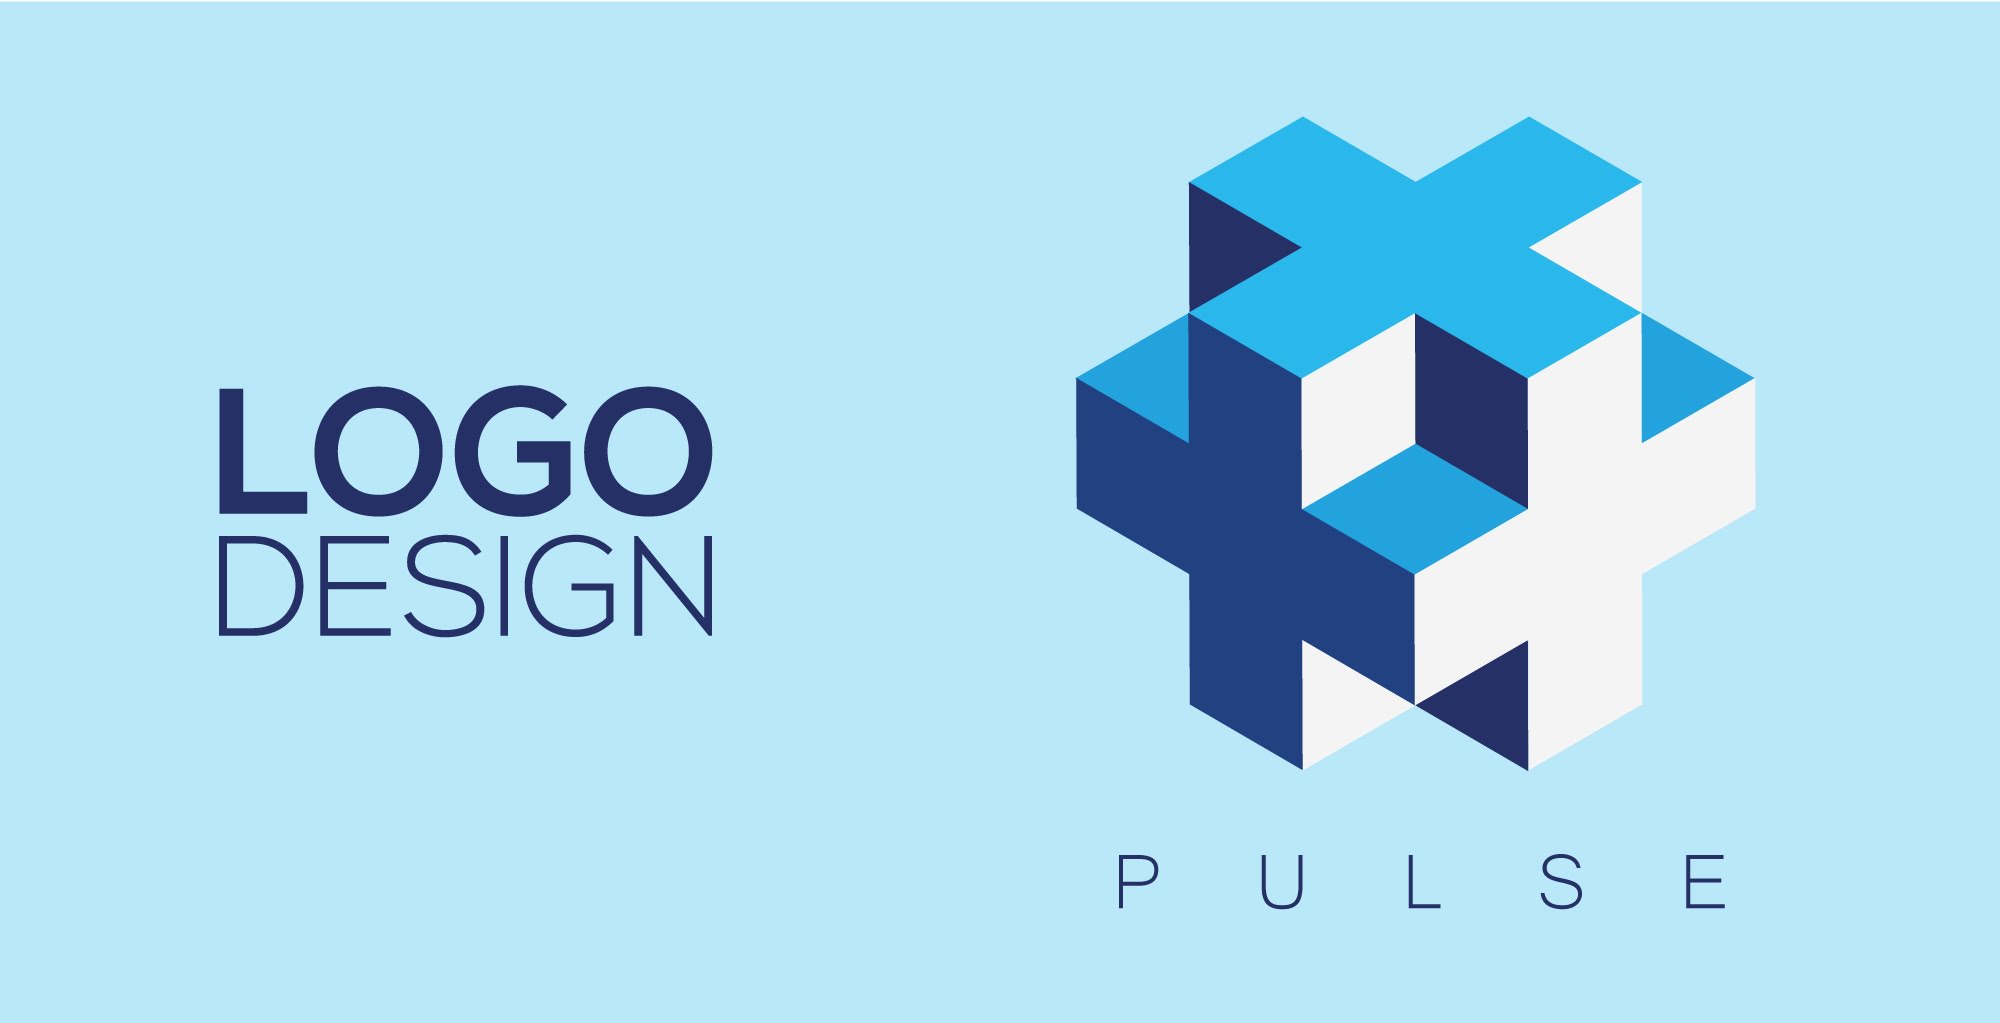 Professional Logo Design - Adobe Illustrator cc (PULSE) - YouTube